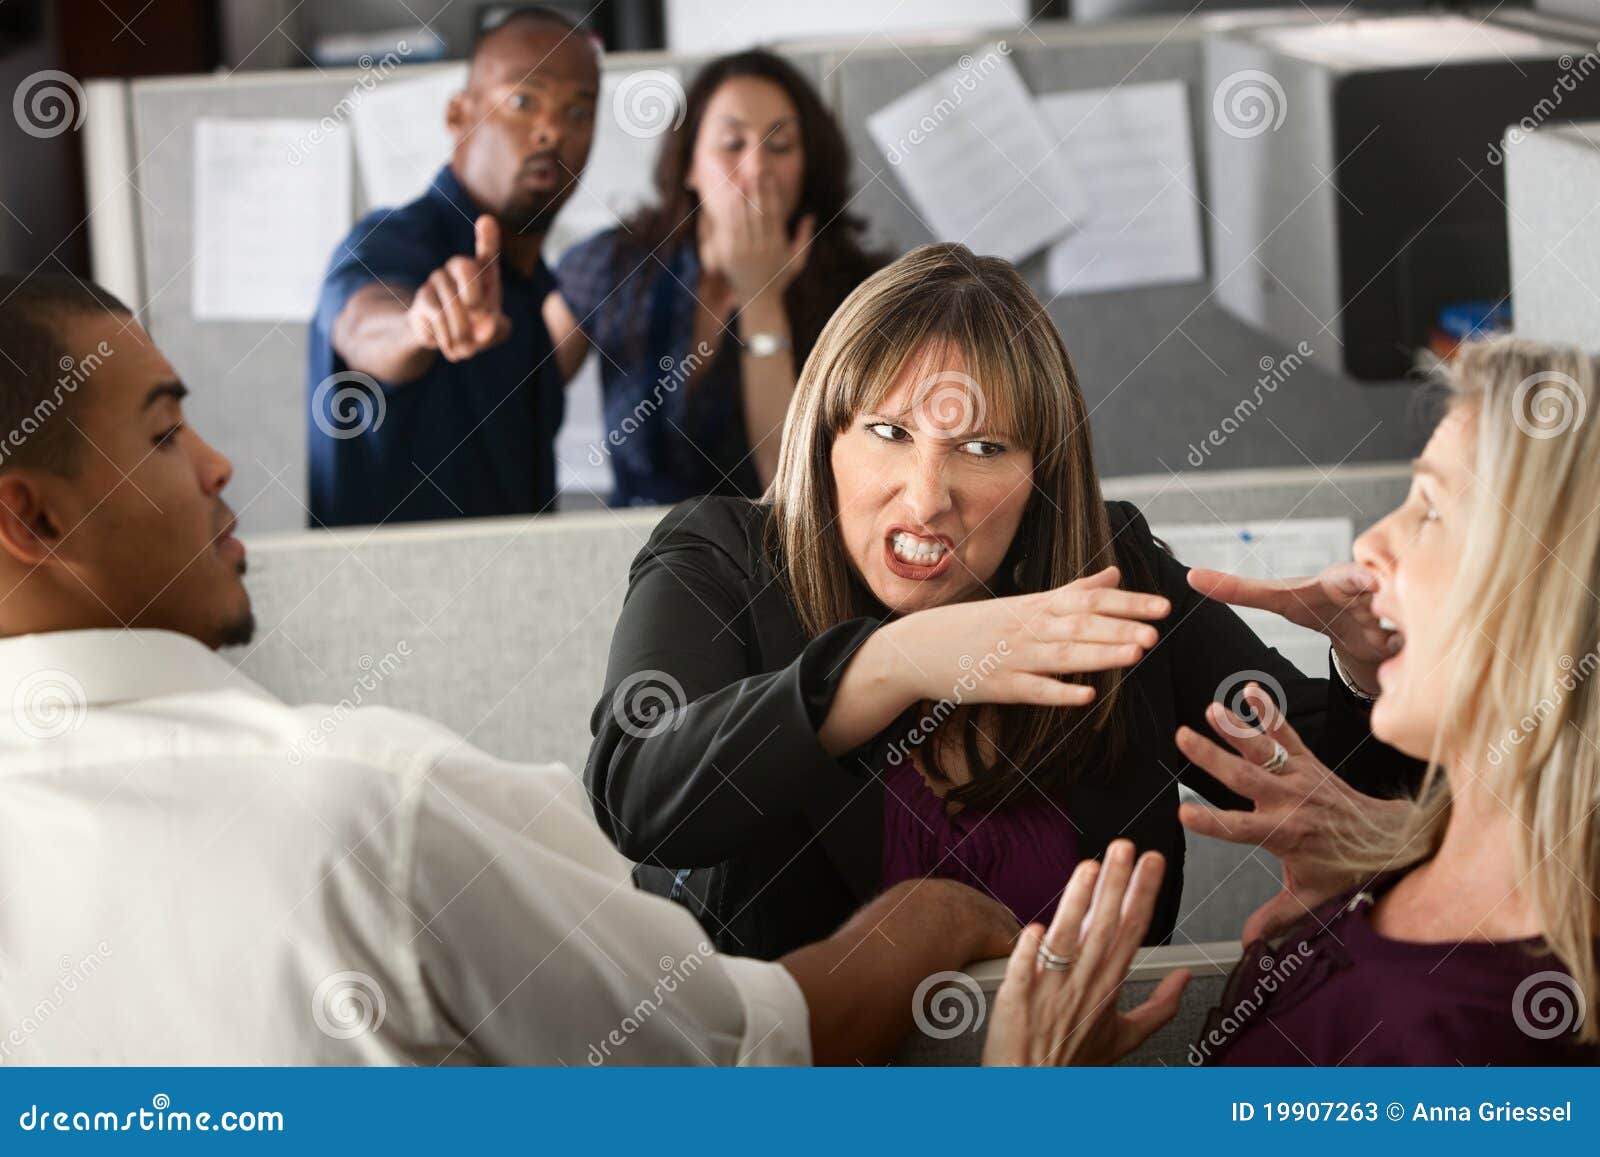 women coworkers quarreling